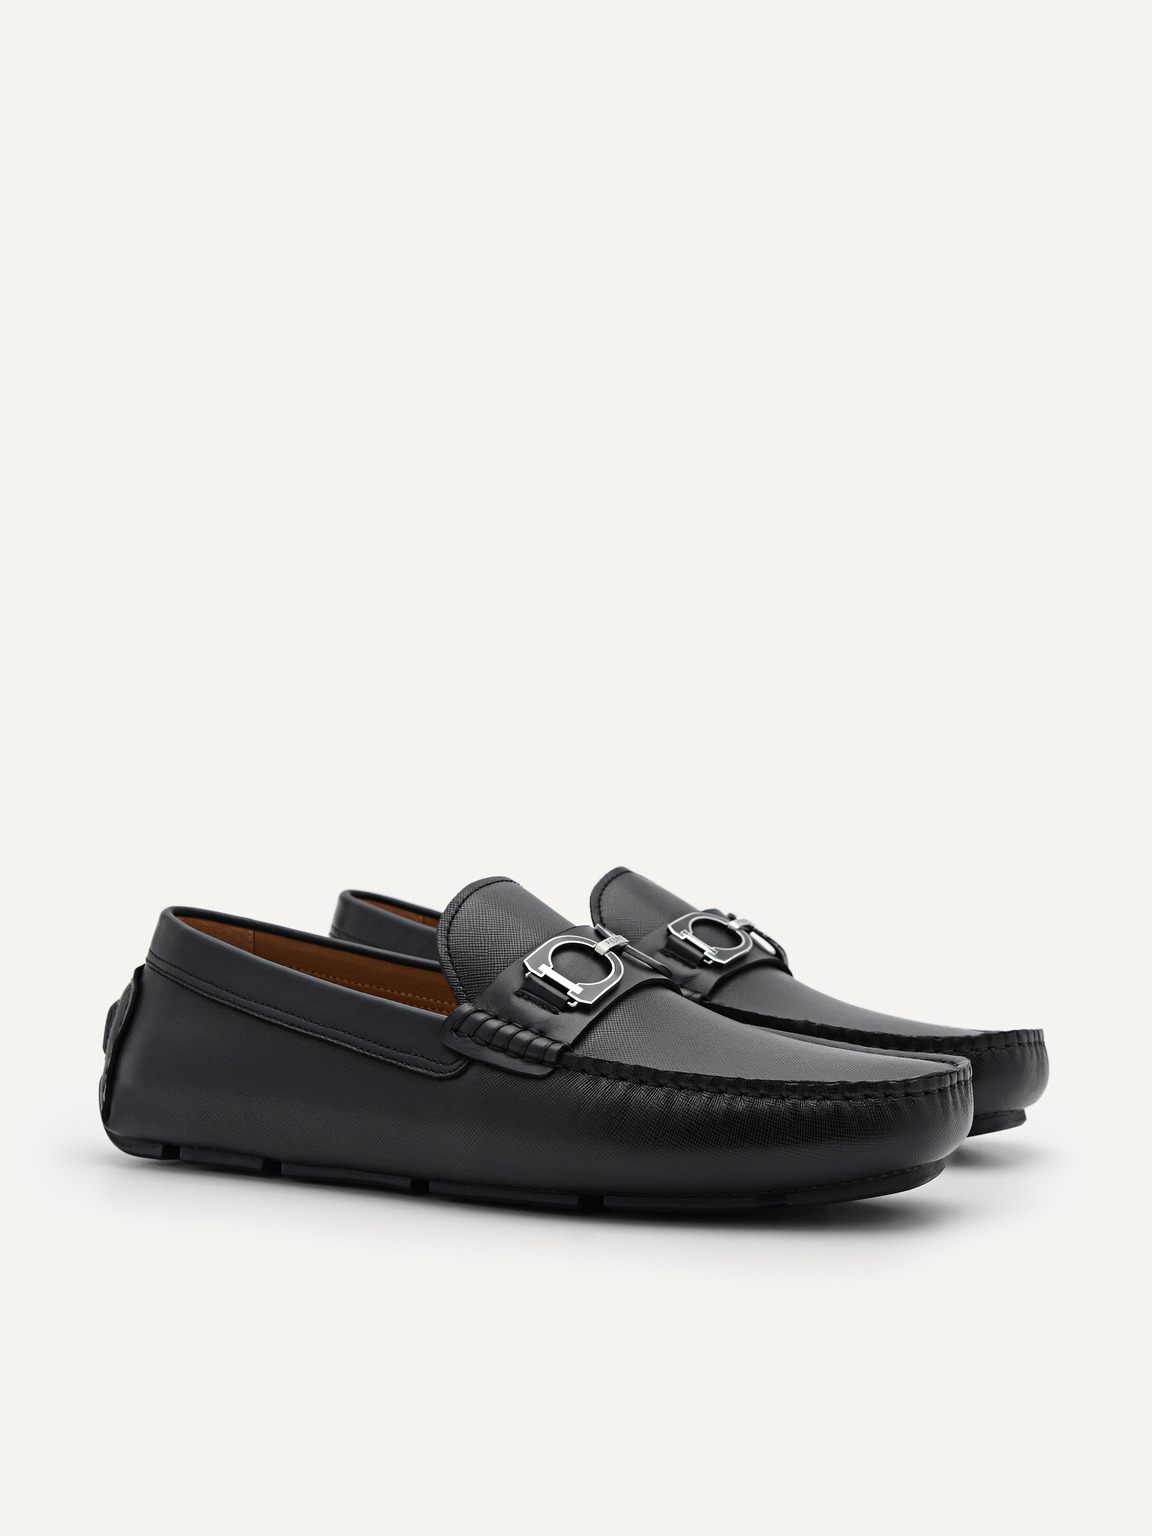 Antonio Leather Driving Shoes, Black